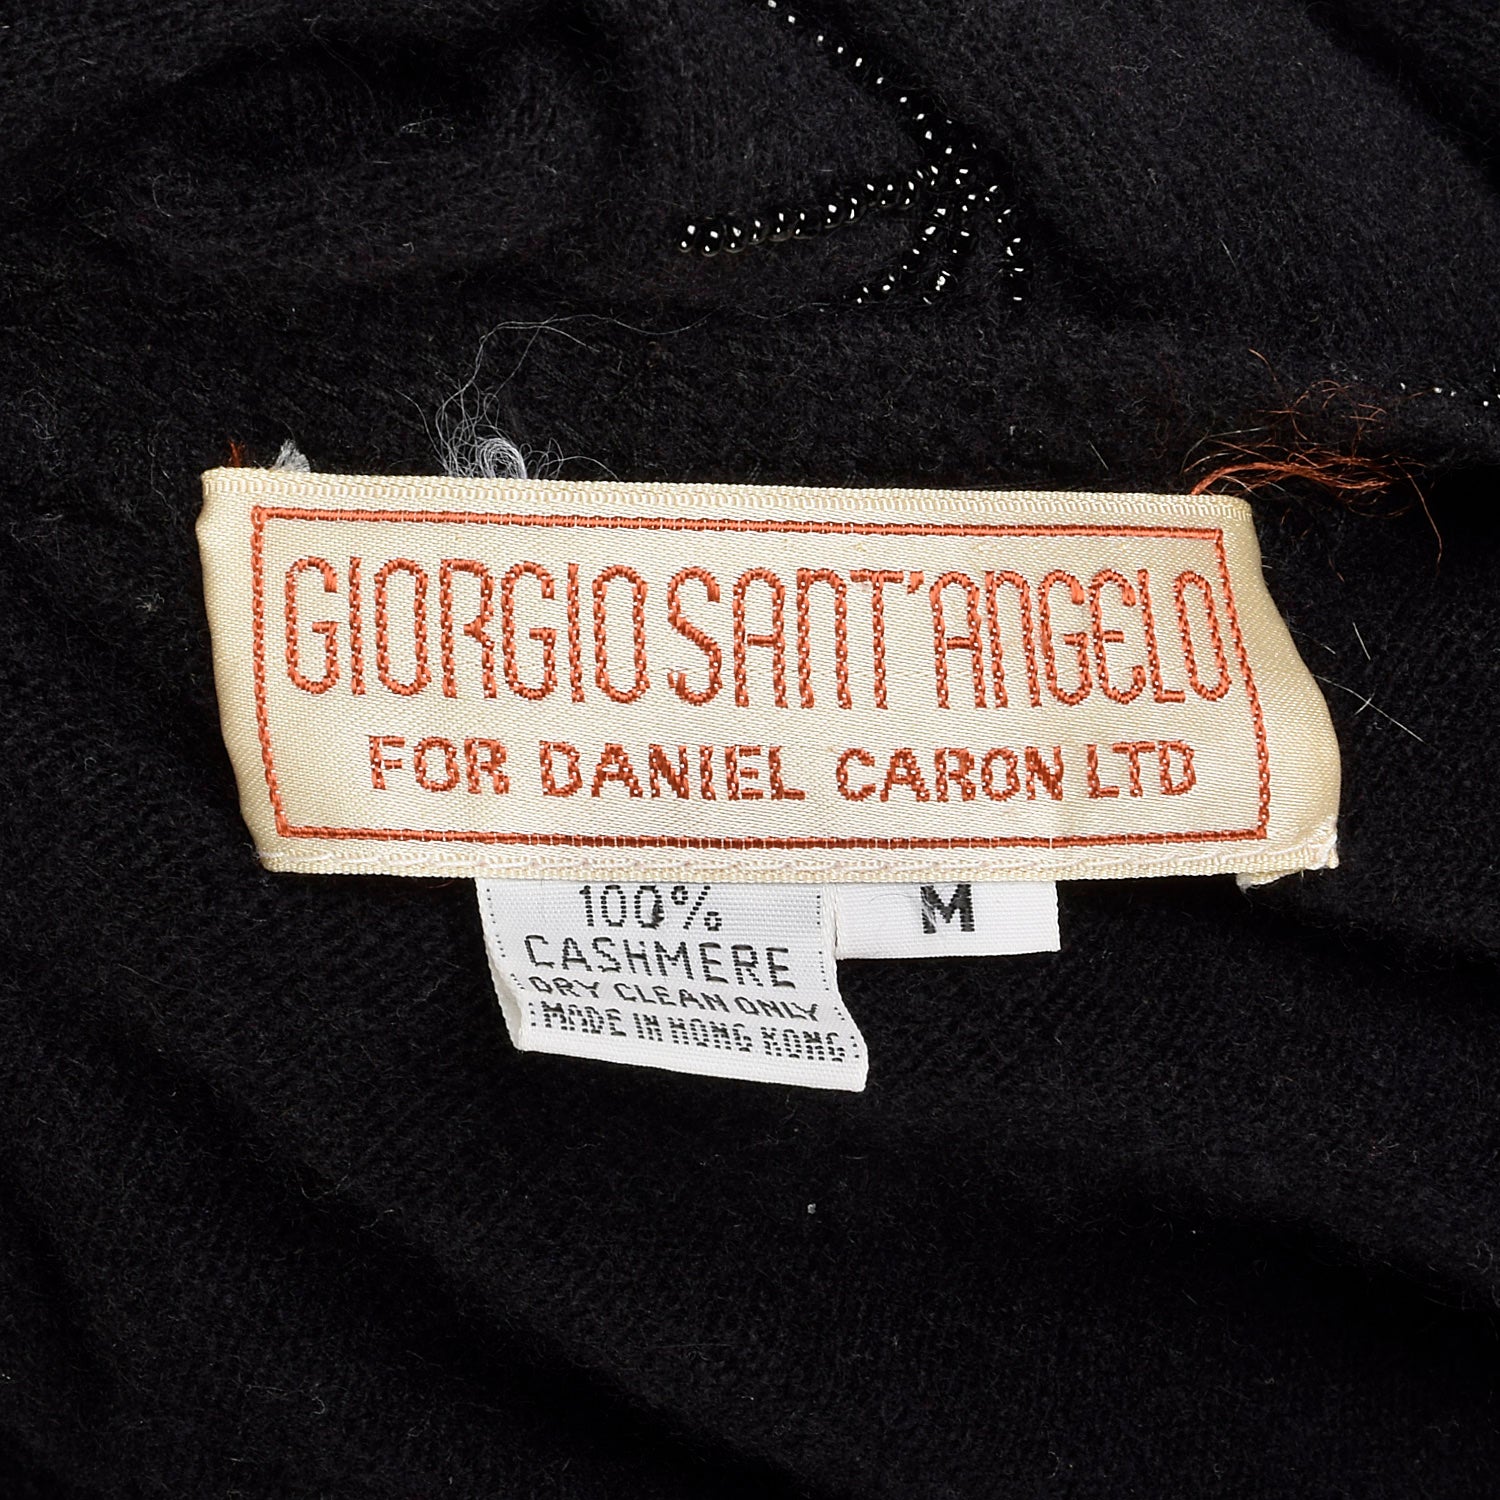 Medium 1990s Giorgio Sant'Angelo Black Cashmere Beaded Sweater